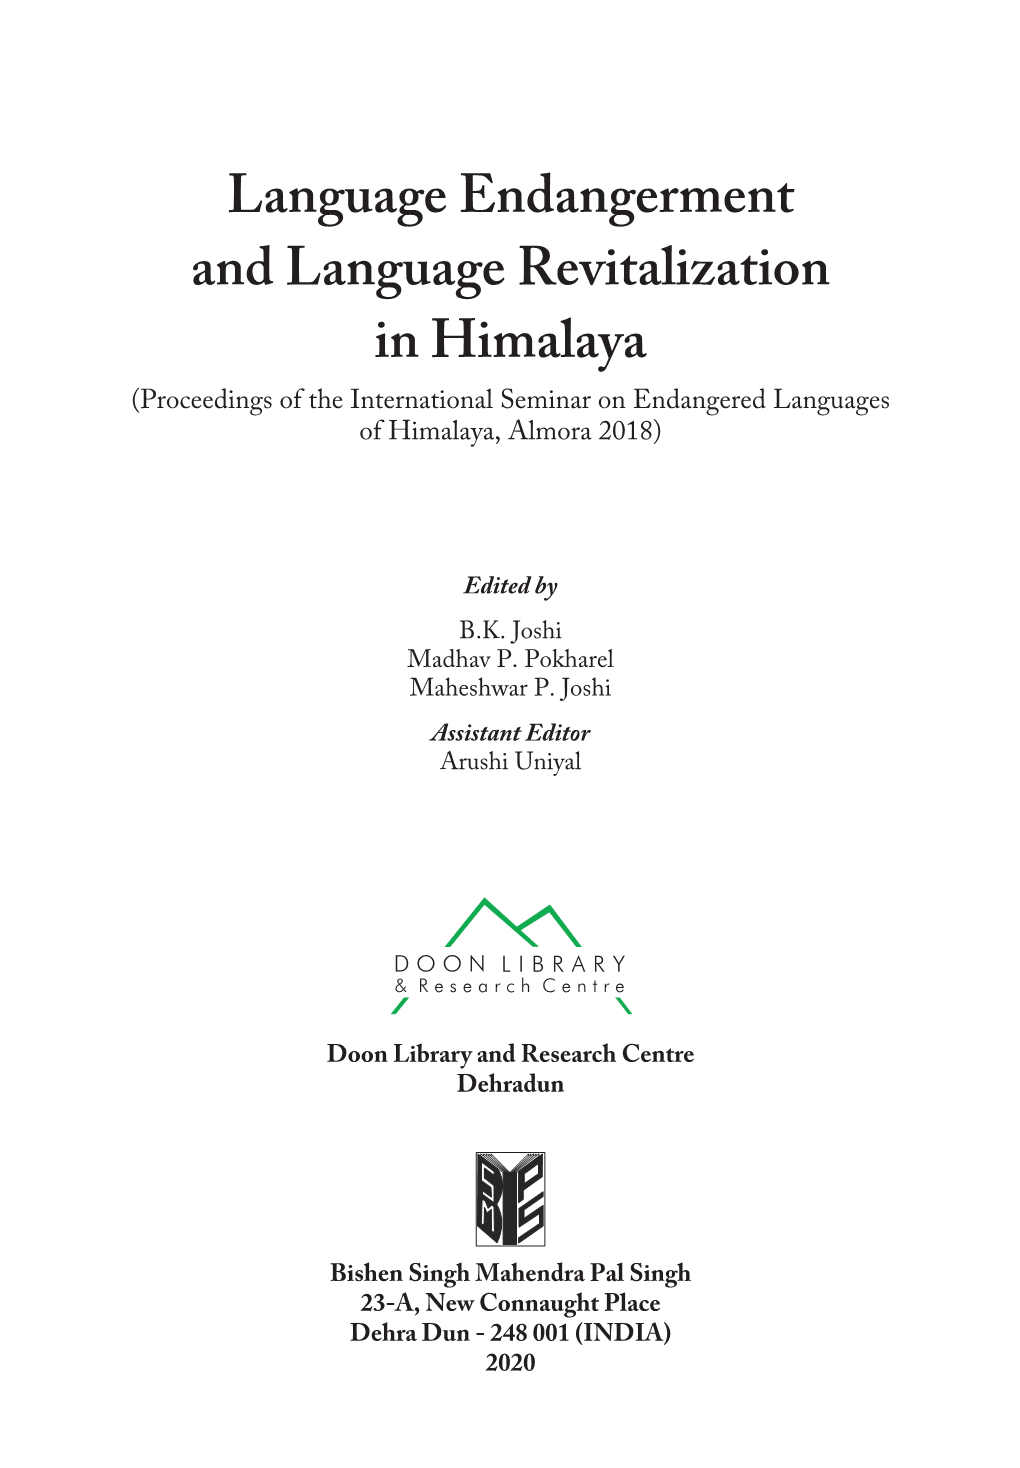 Language Endangerment and Language Revitalization in Himalaya (Proceedings of the International Seminar on Endangered Languages of Himalaya, Almora 2018)